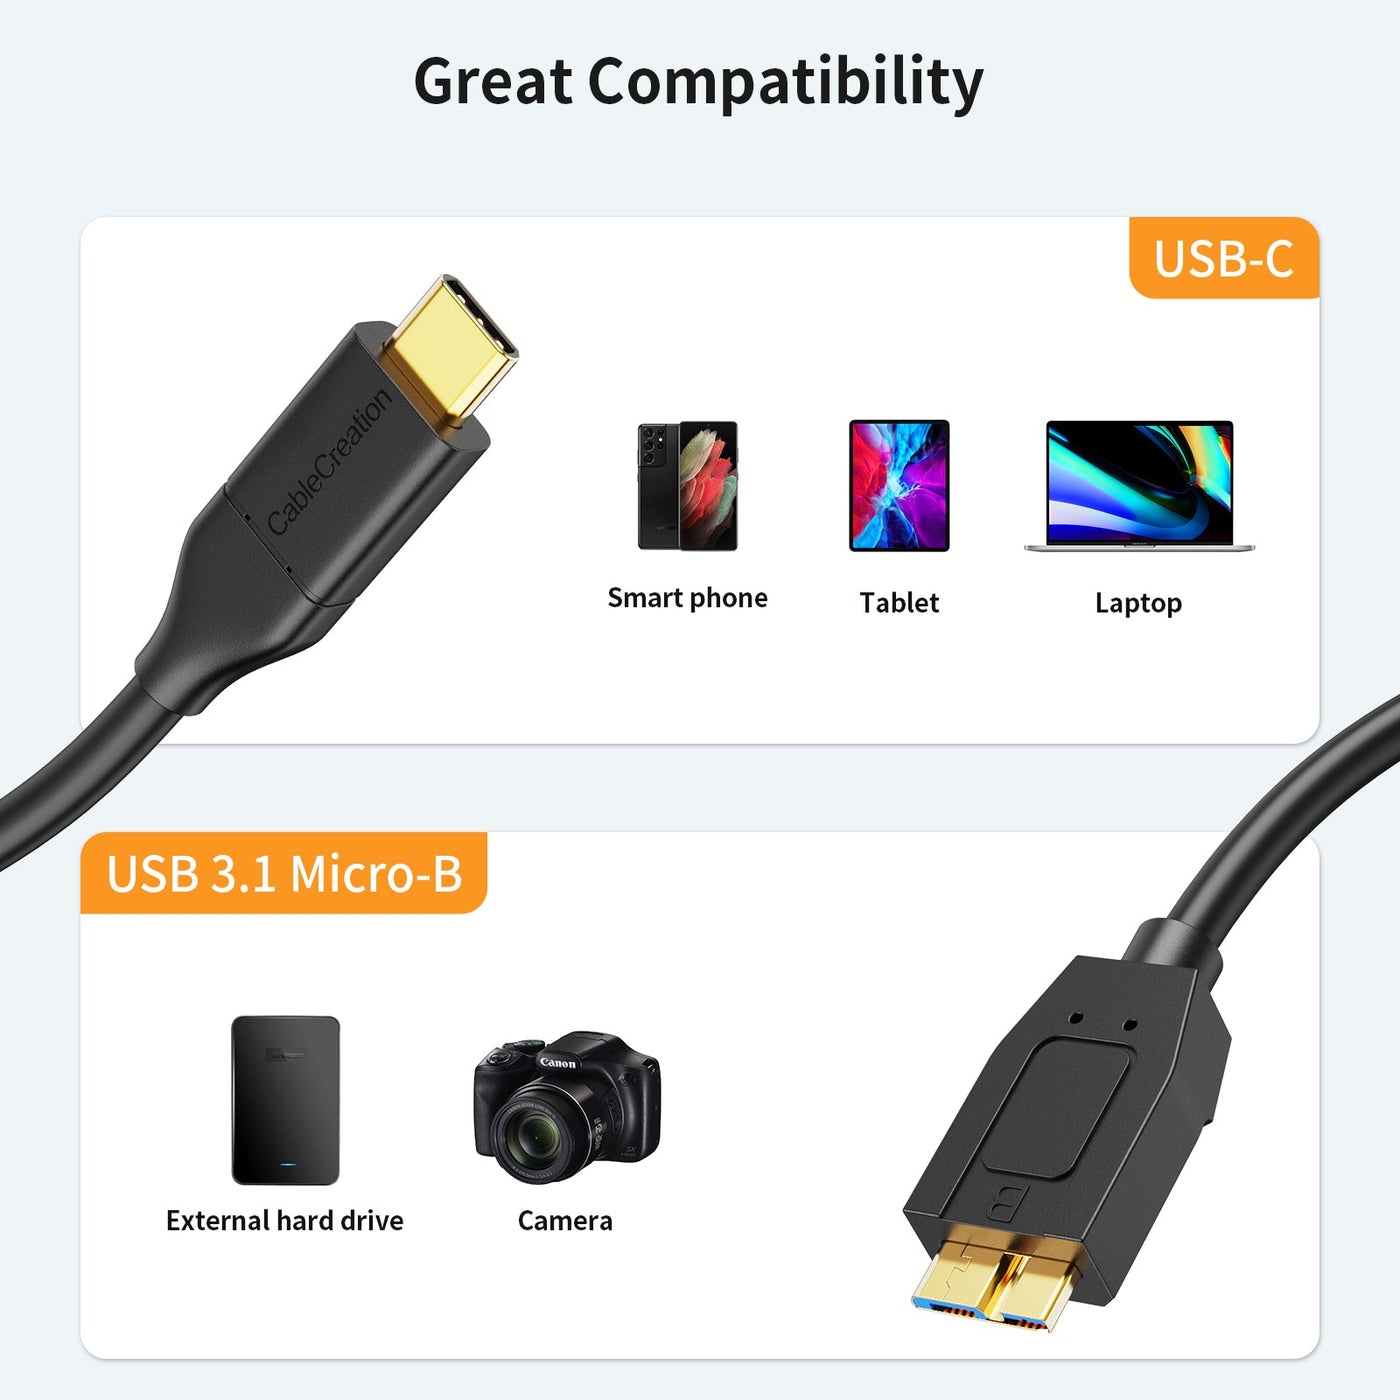 USB 3.0 Micro B for portable hard drives